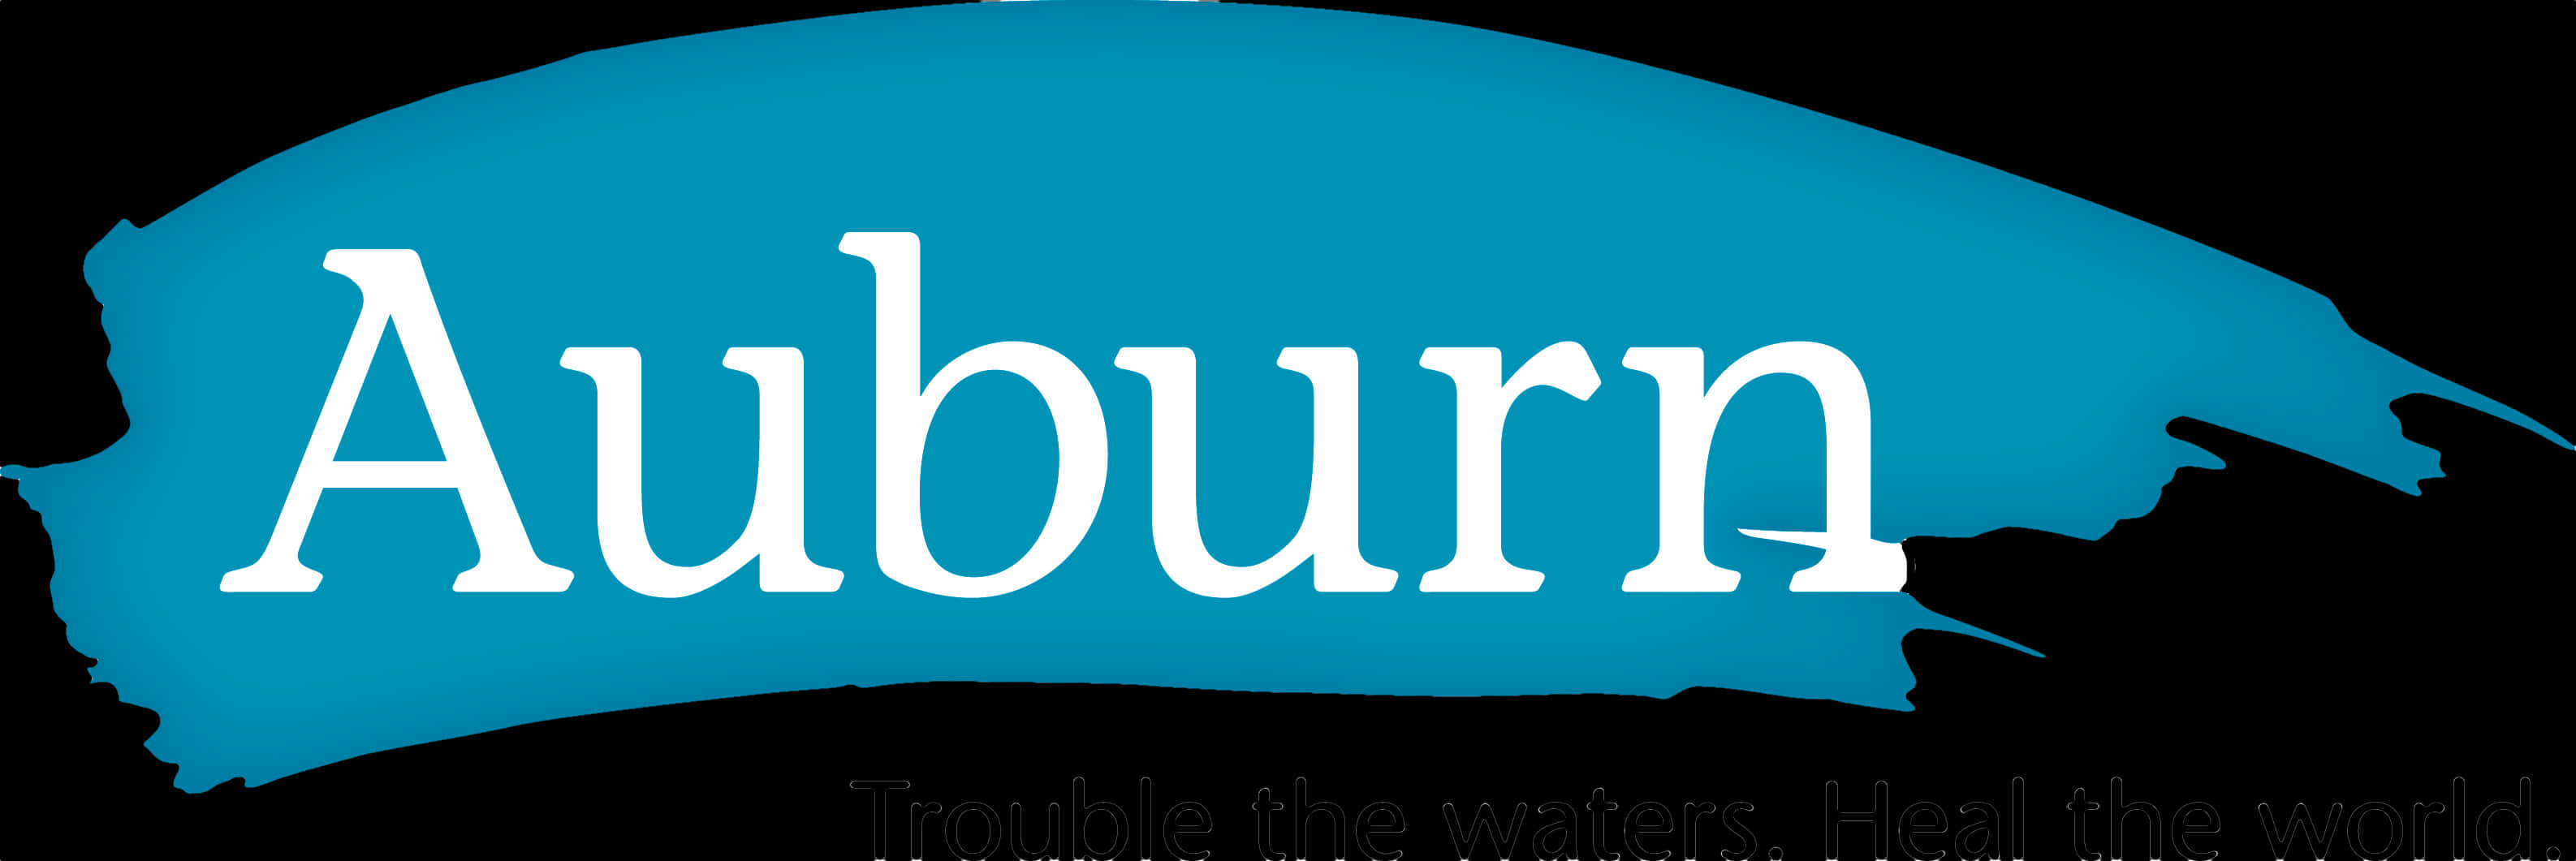 Auburn University Logo Graphic